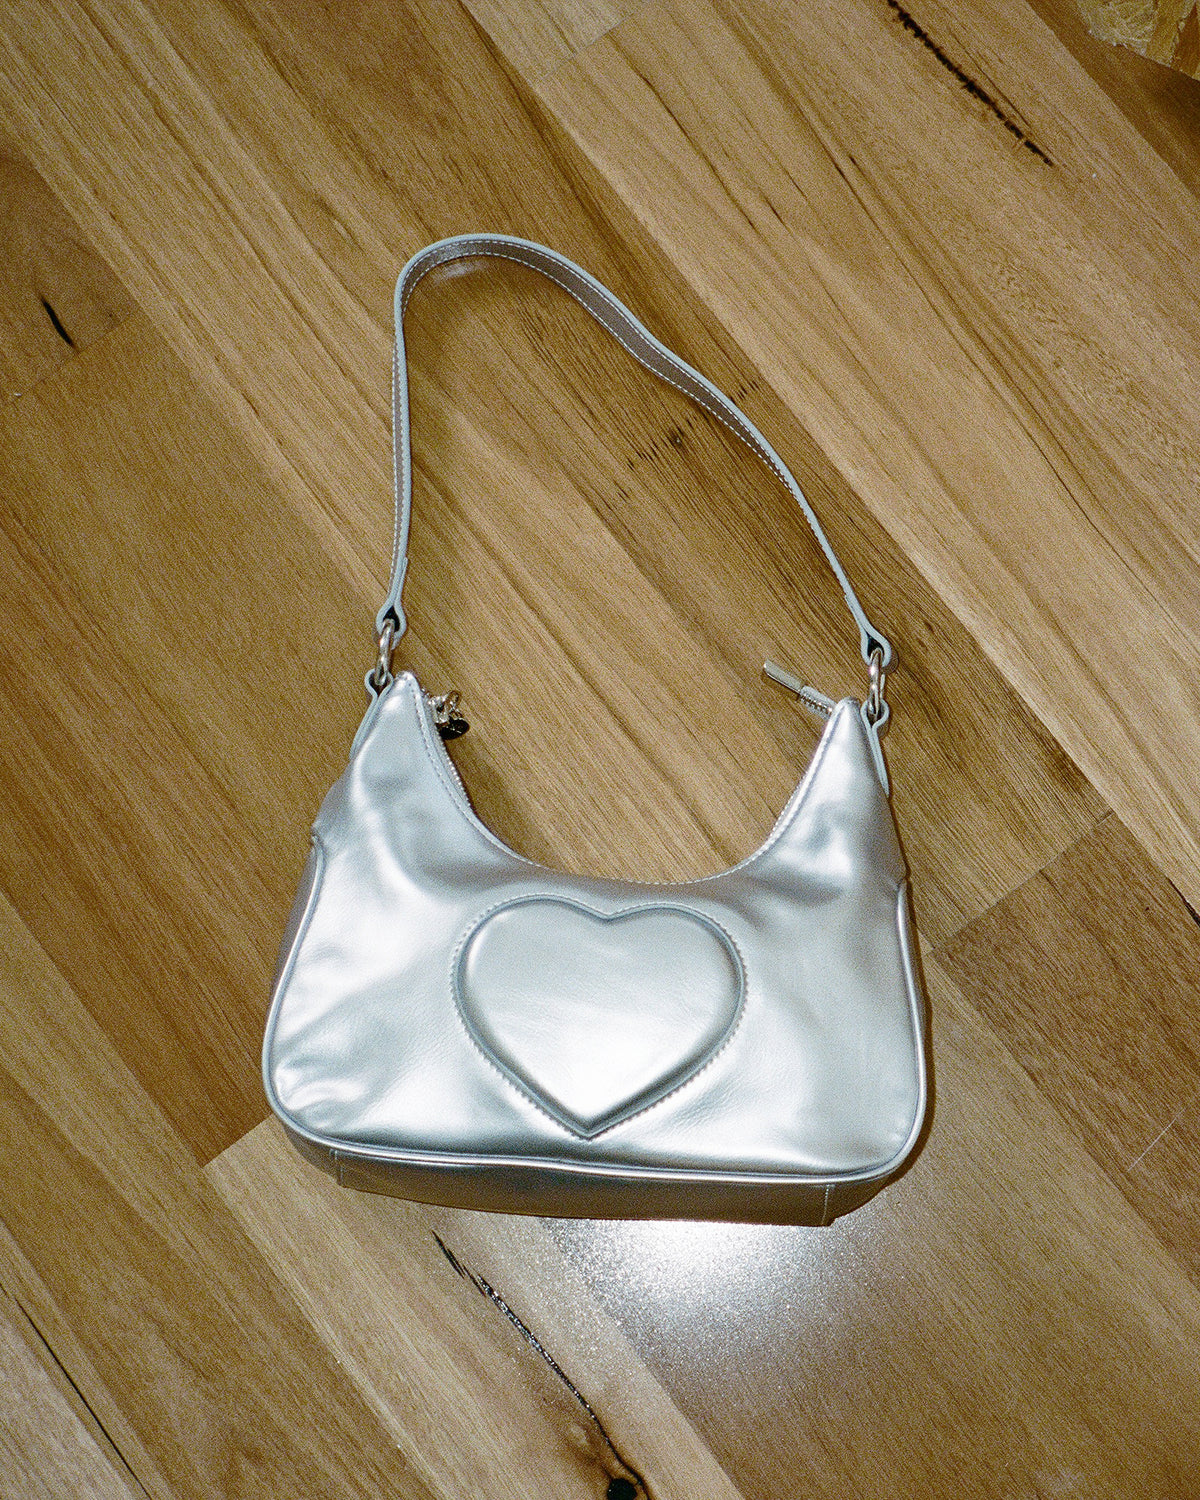 Recycled Silver Heart Shoulder Bag